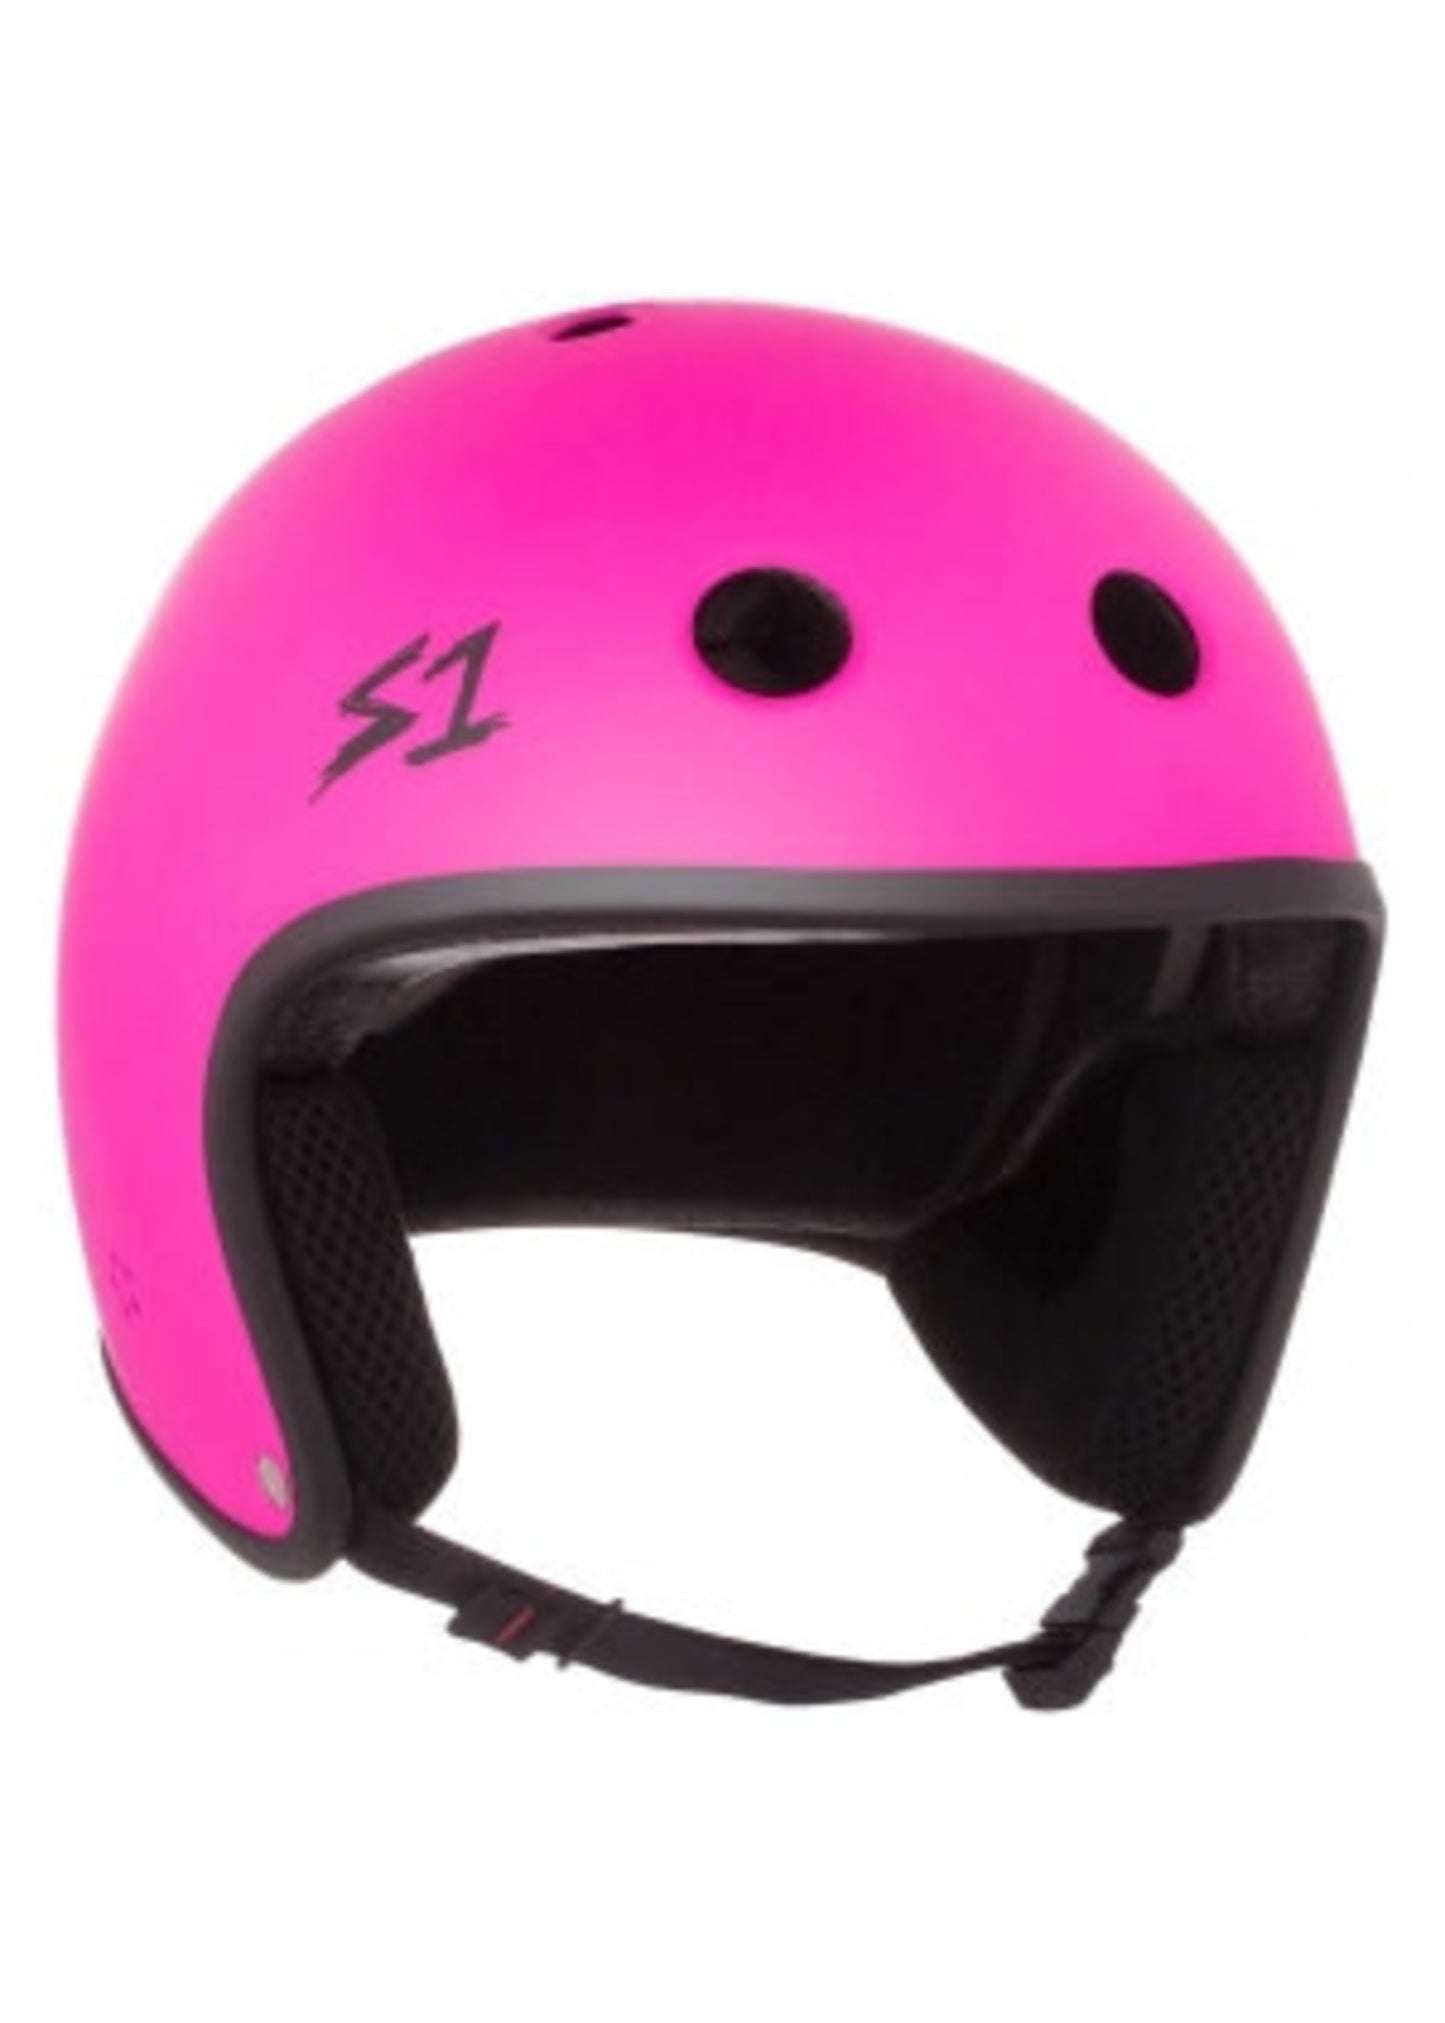 S1 Lifer - Retro Helmet